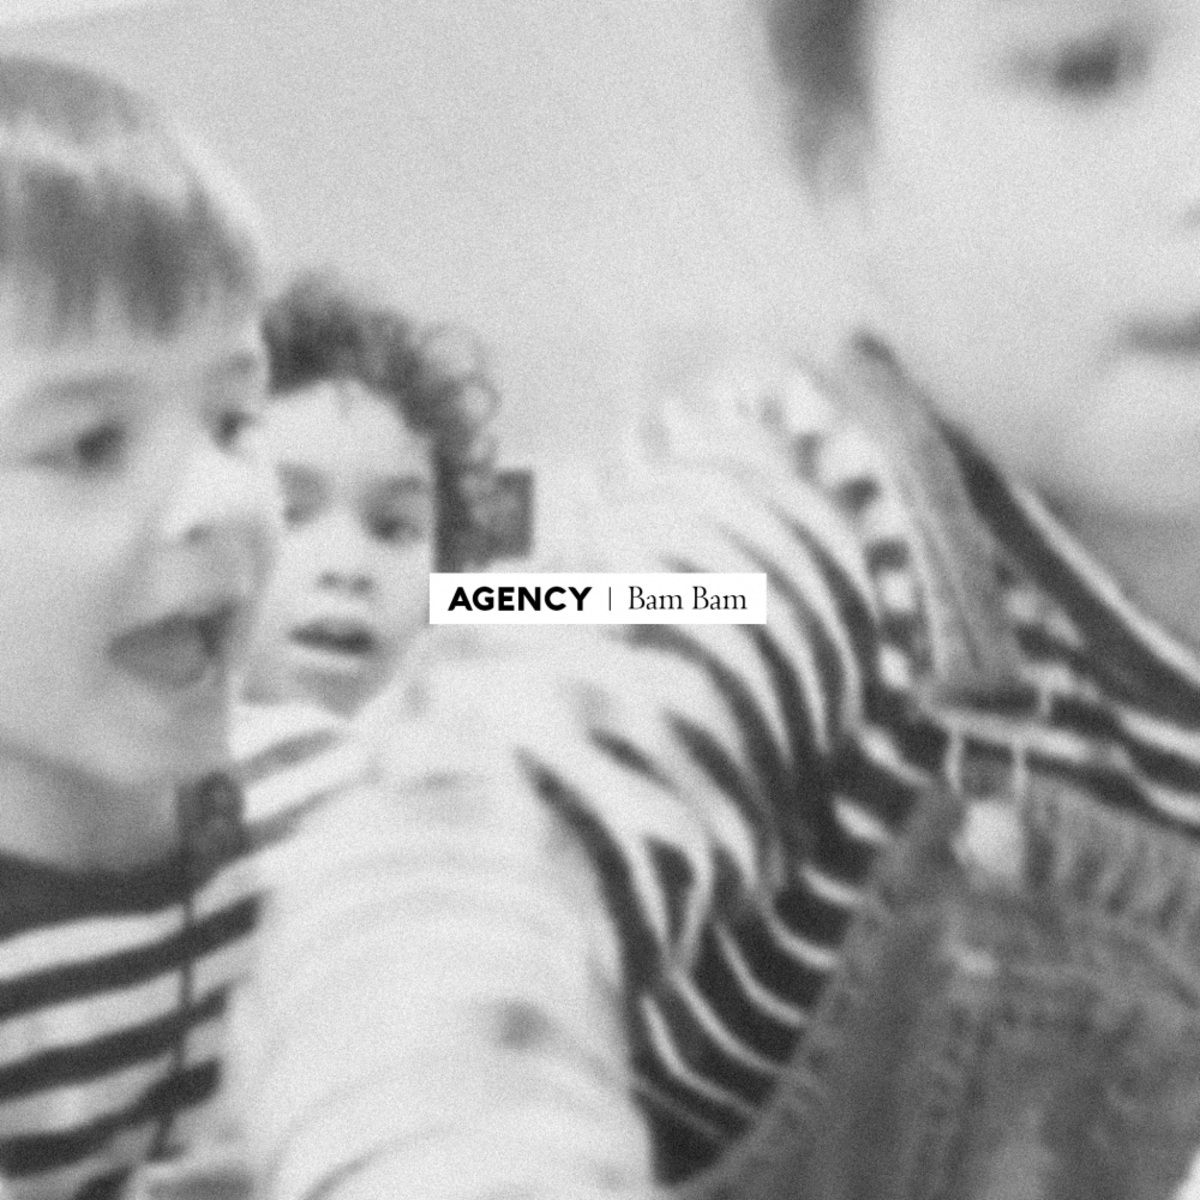 Agency - Bam Bam / Anticodon